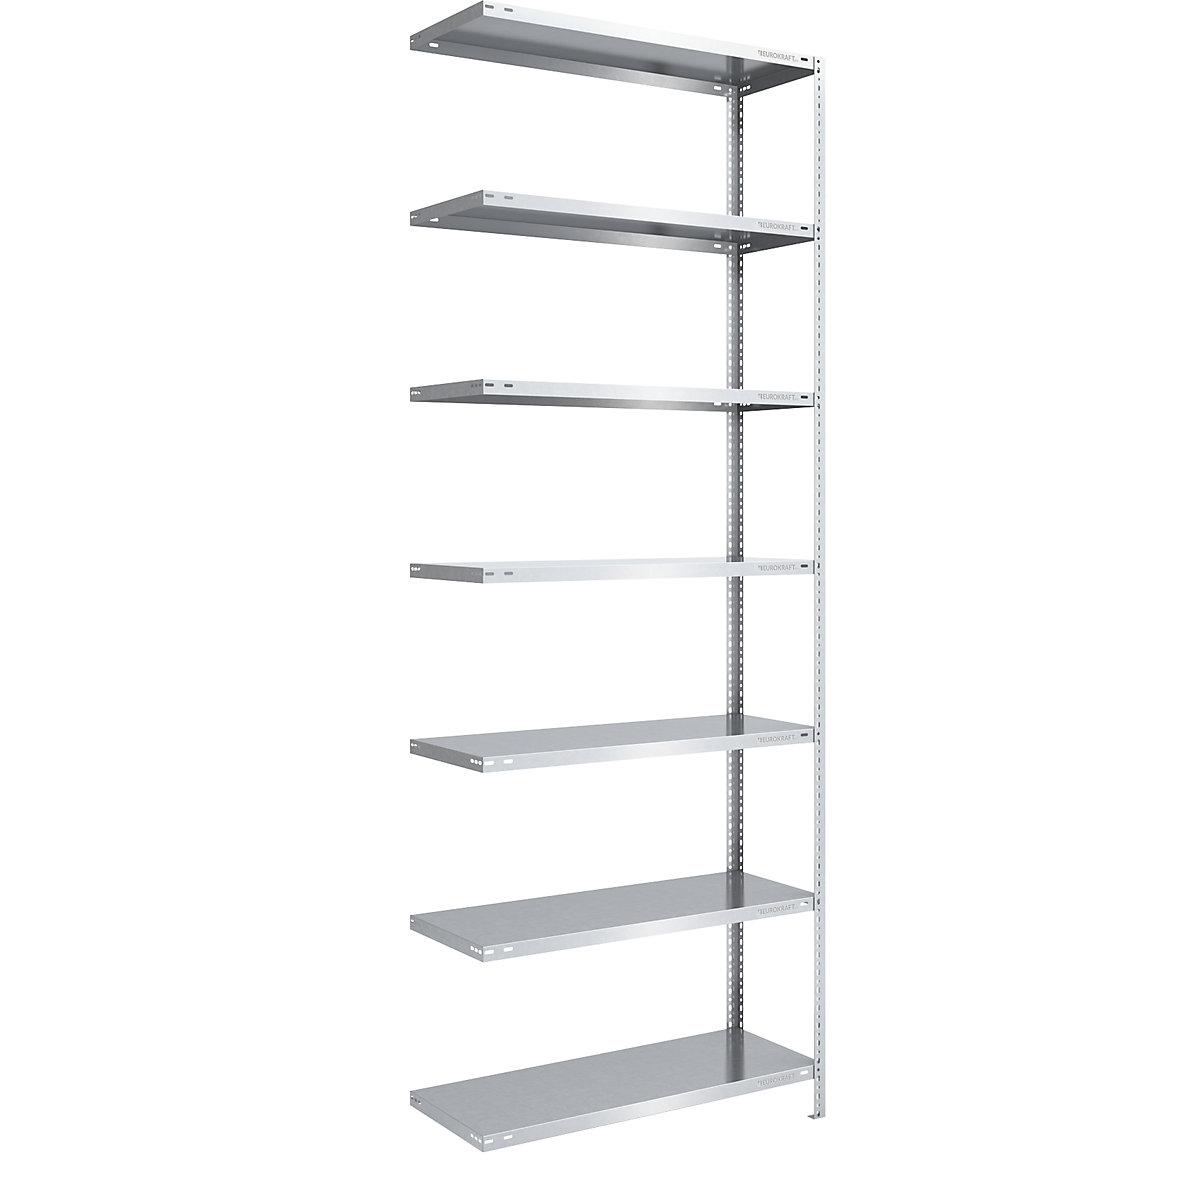 Bolt-together shelf unit, light duty, zinc plated – eurokraft pro, shelf unit height 3000 mm, shelf width 1000 mm, depth 500 mm, extension shelf unit-13